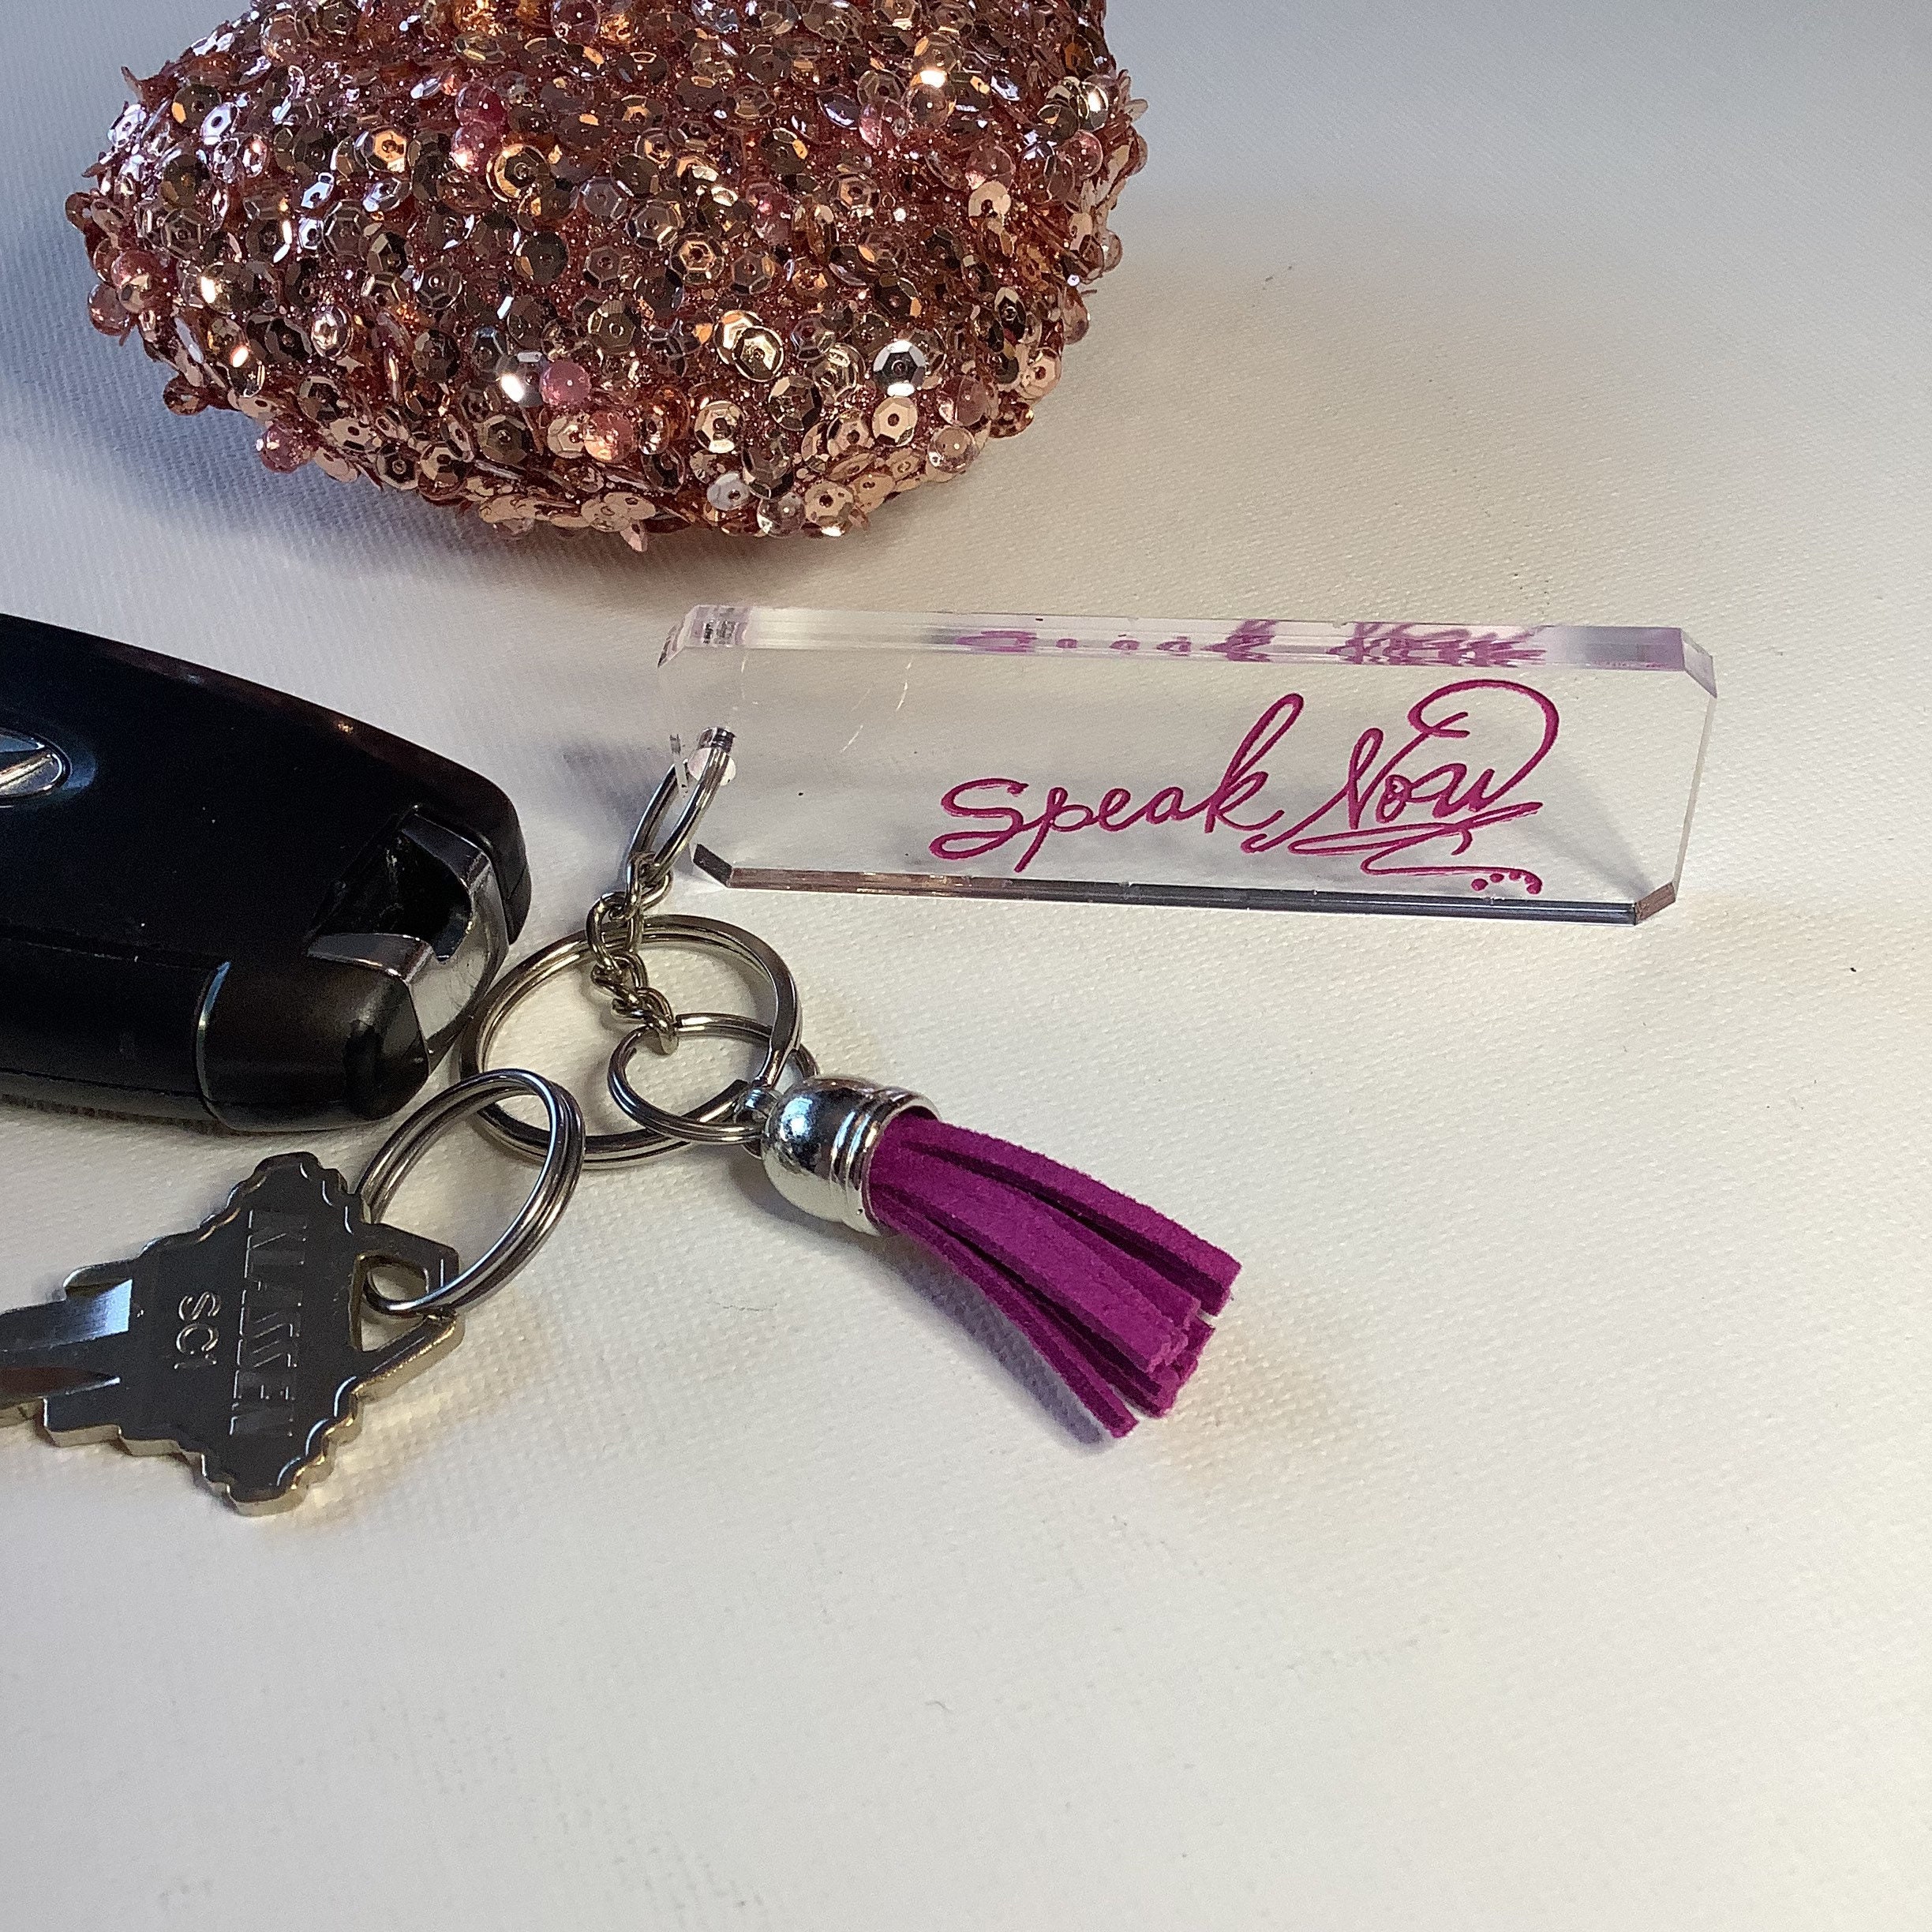  Pluspexy Taylor Wrist Keychains for Women Speak Now Accessories  Friend Gifts for Swiftie Purple Bracelet Keychain Key Rings for Car Keys,Backpacks,Key  of Home : Clothing, Shoes & Jewelry